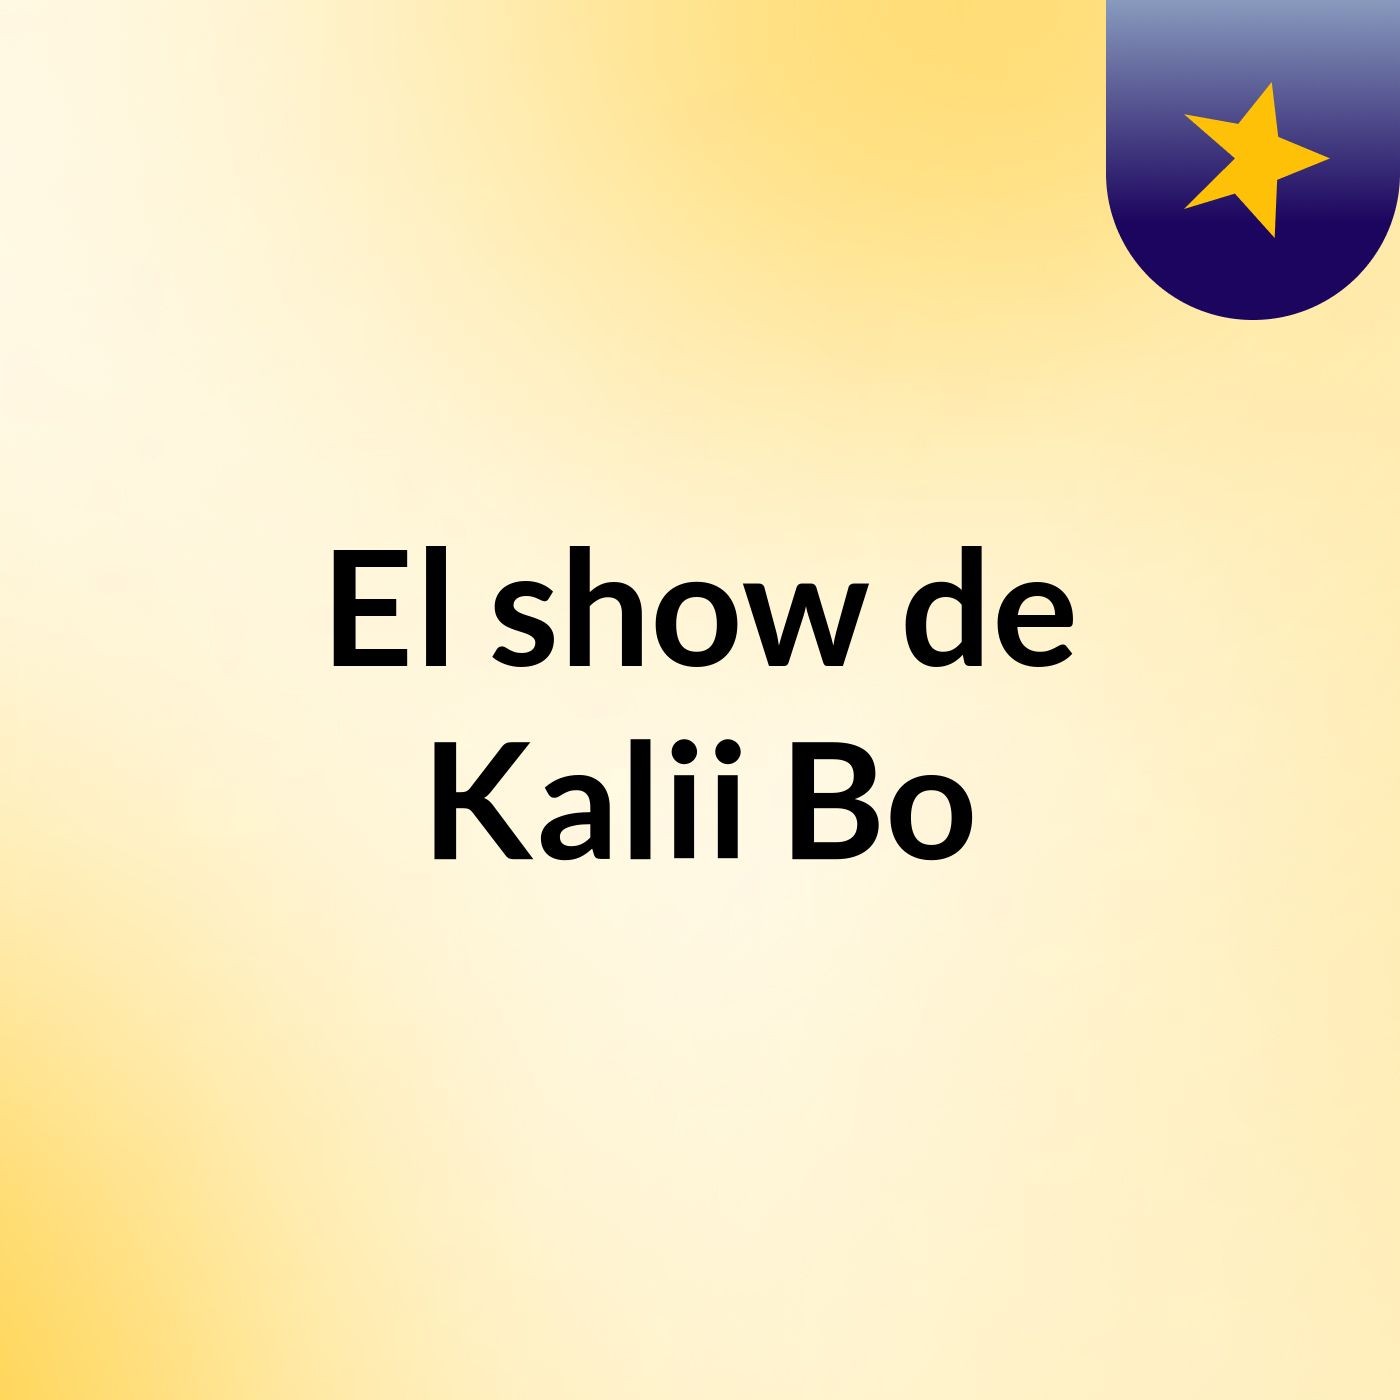 El show de Kalii Bo